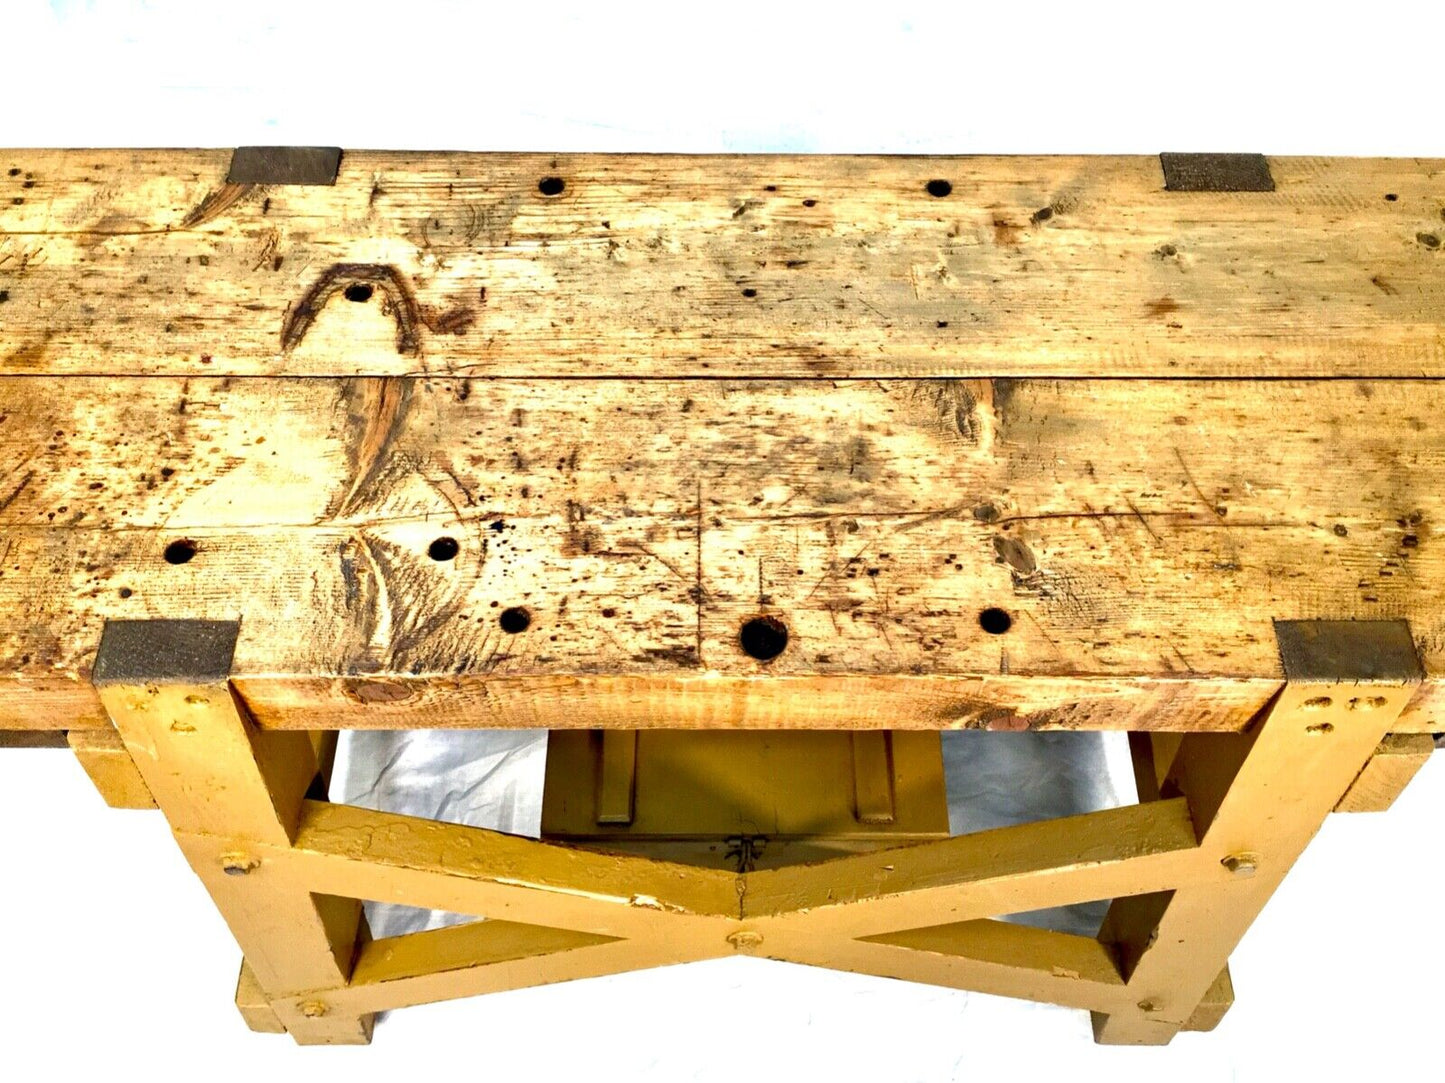 Antique Rustic Work table / Carpenter's Workbench / Solid Oak Top / Vintage